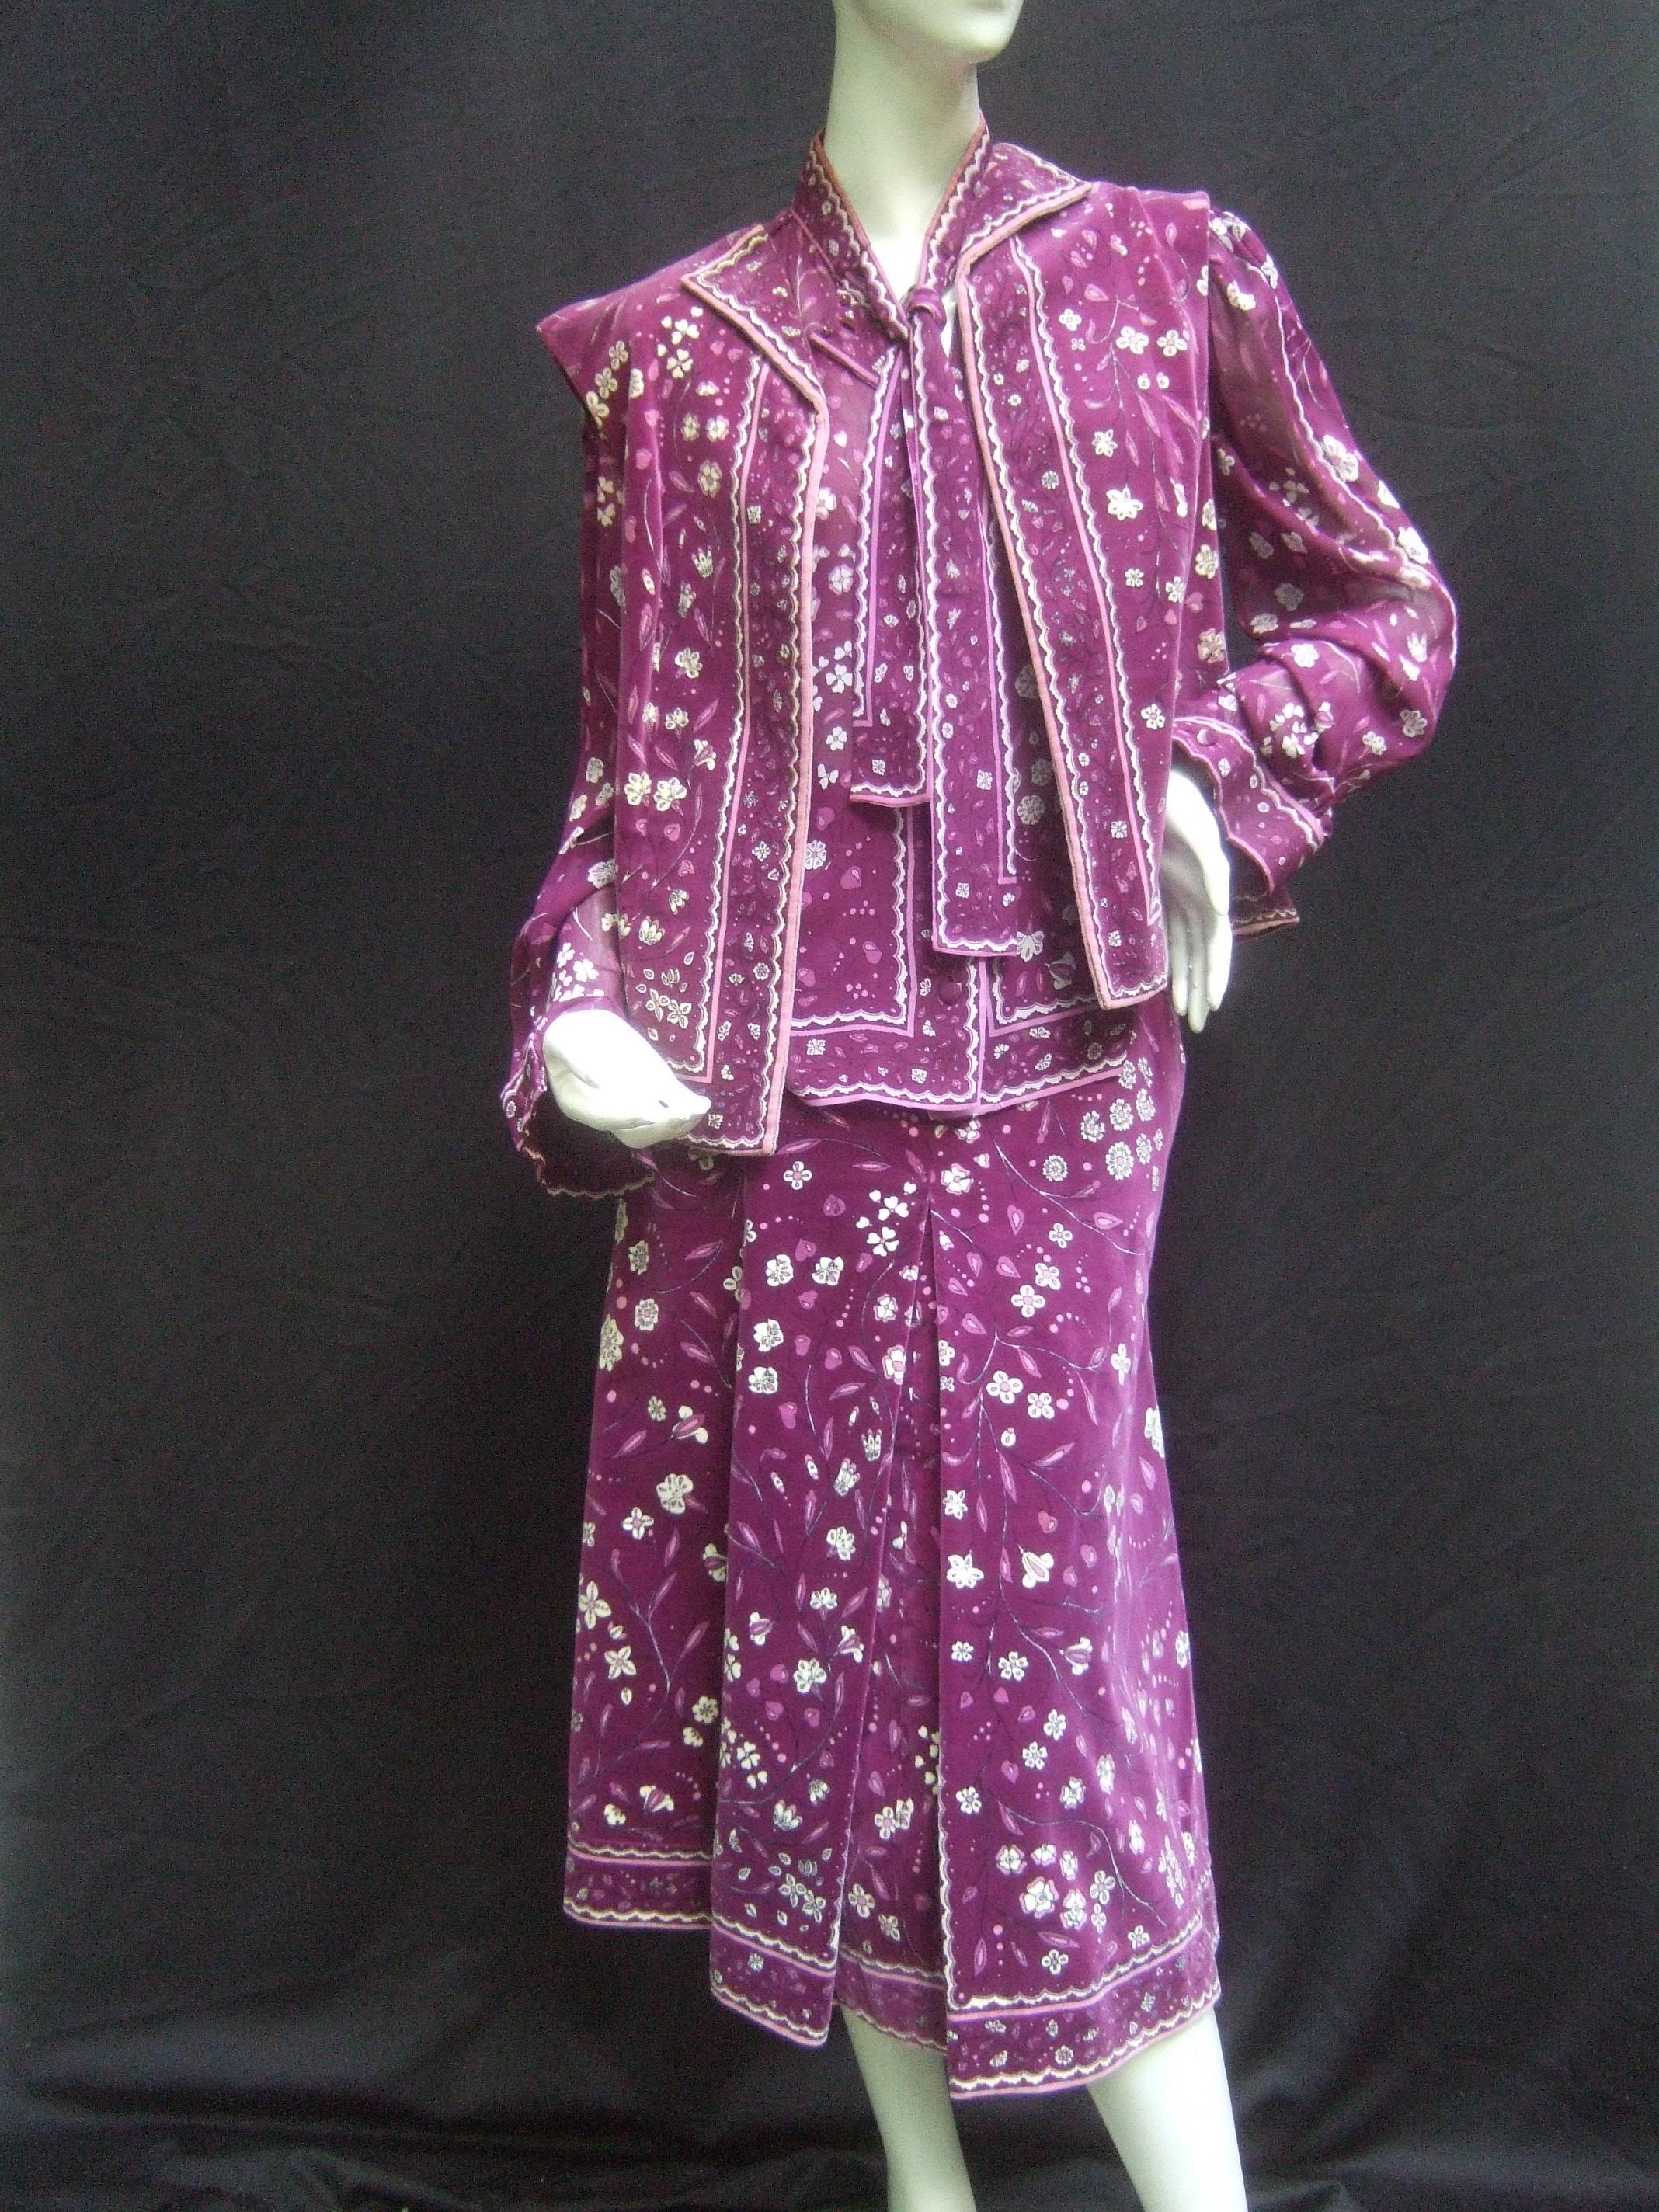 Emilio Pucci Purple floral silk & velvet ensemble c 1970
The stylish ensemble is designed with a cotton velvet
vest & matching velvet print skirt 

The sheer silk crepe blouse has the floral print graphics 
The sheer blouse has a built in